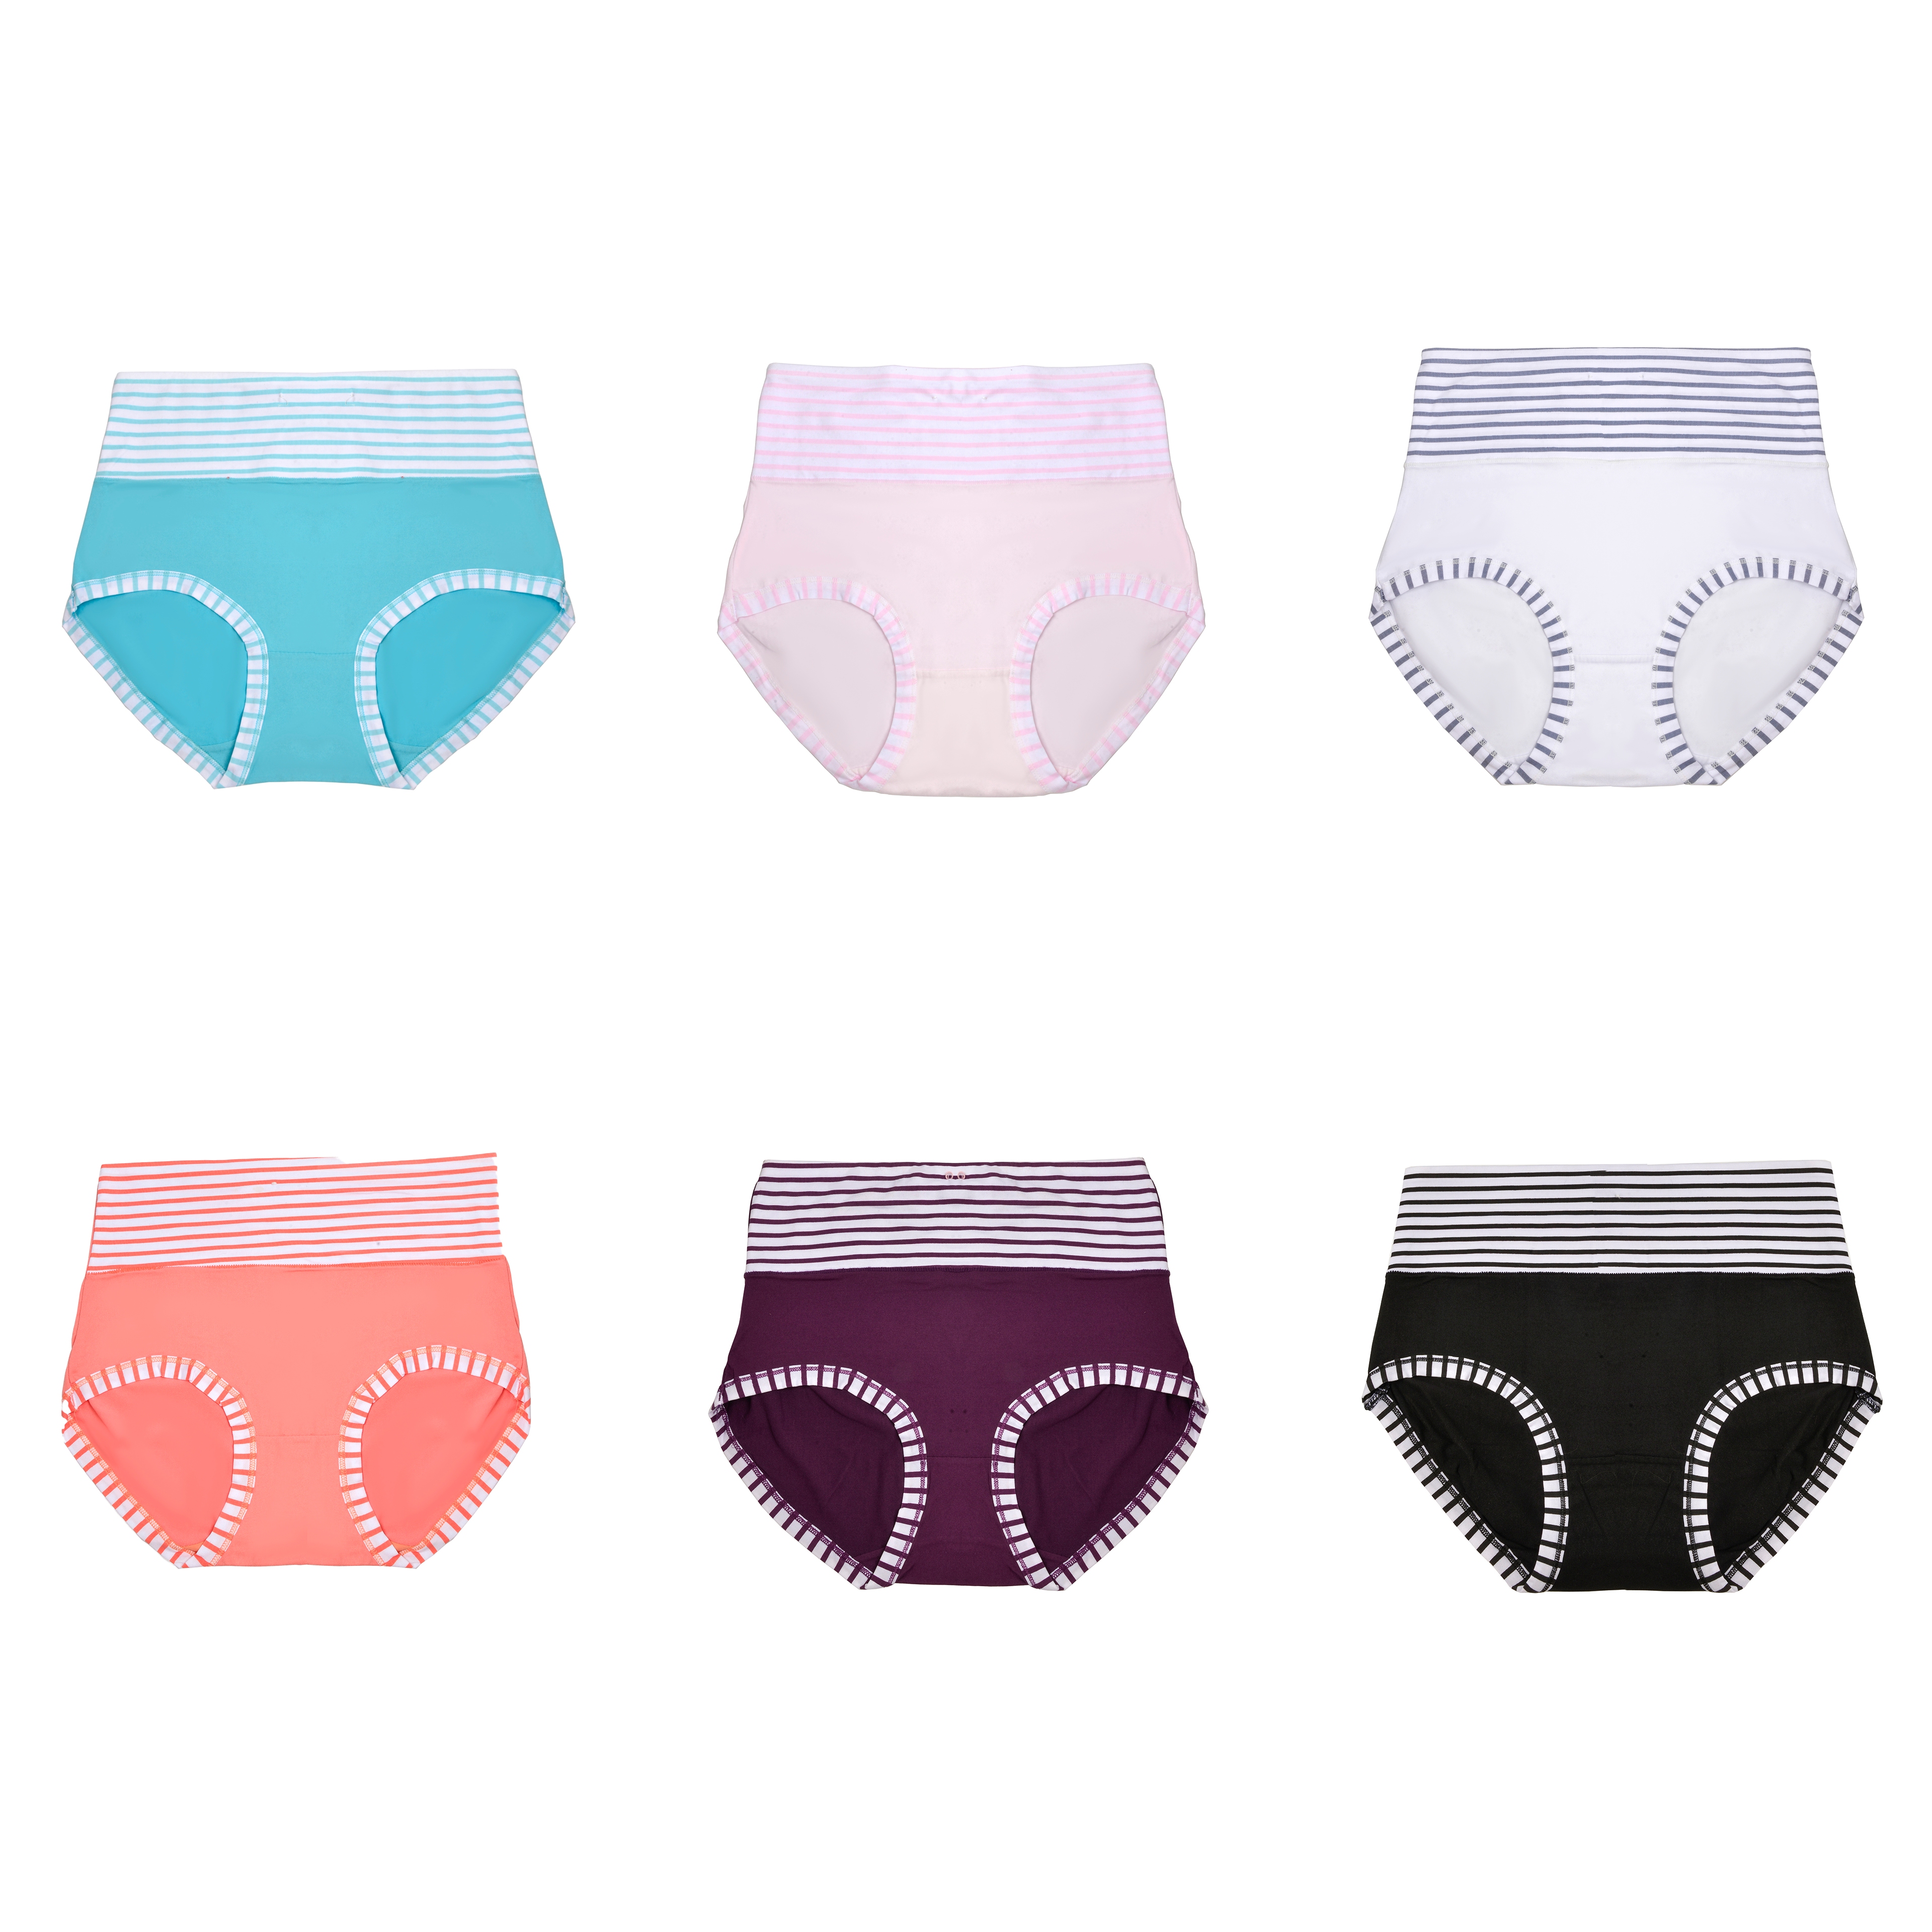 Foreign Trade Women‘s Pants Export Underwear Women‘s Safety Women‘s Boxers Milk Fiber Panties Hot Selling Underwear Popular 10